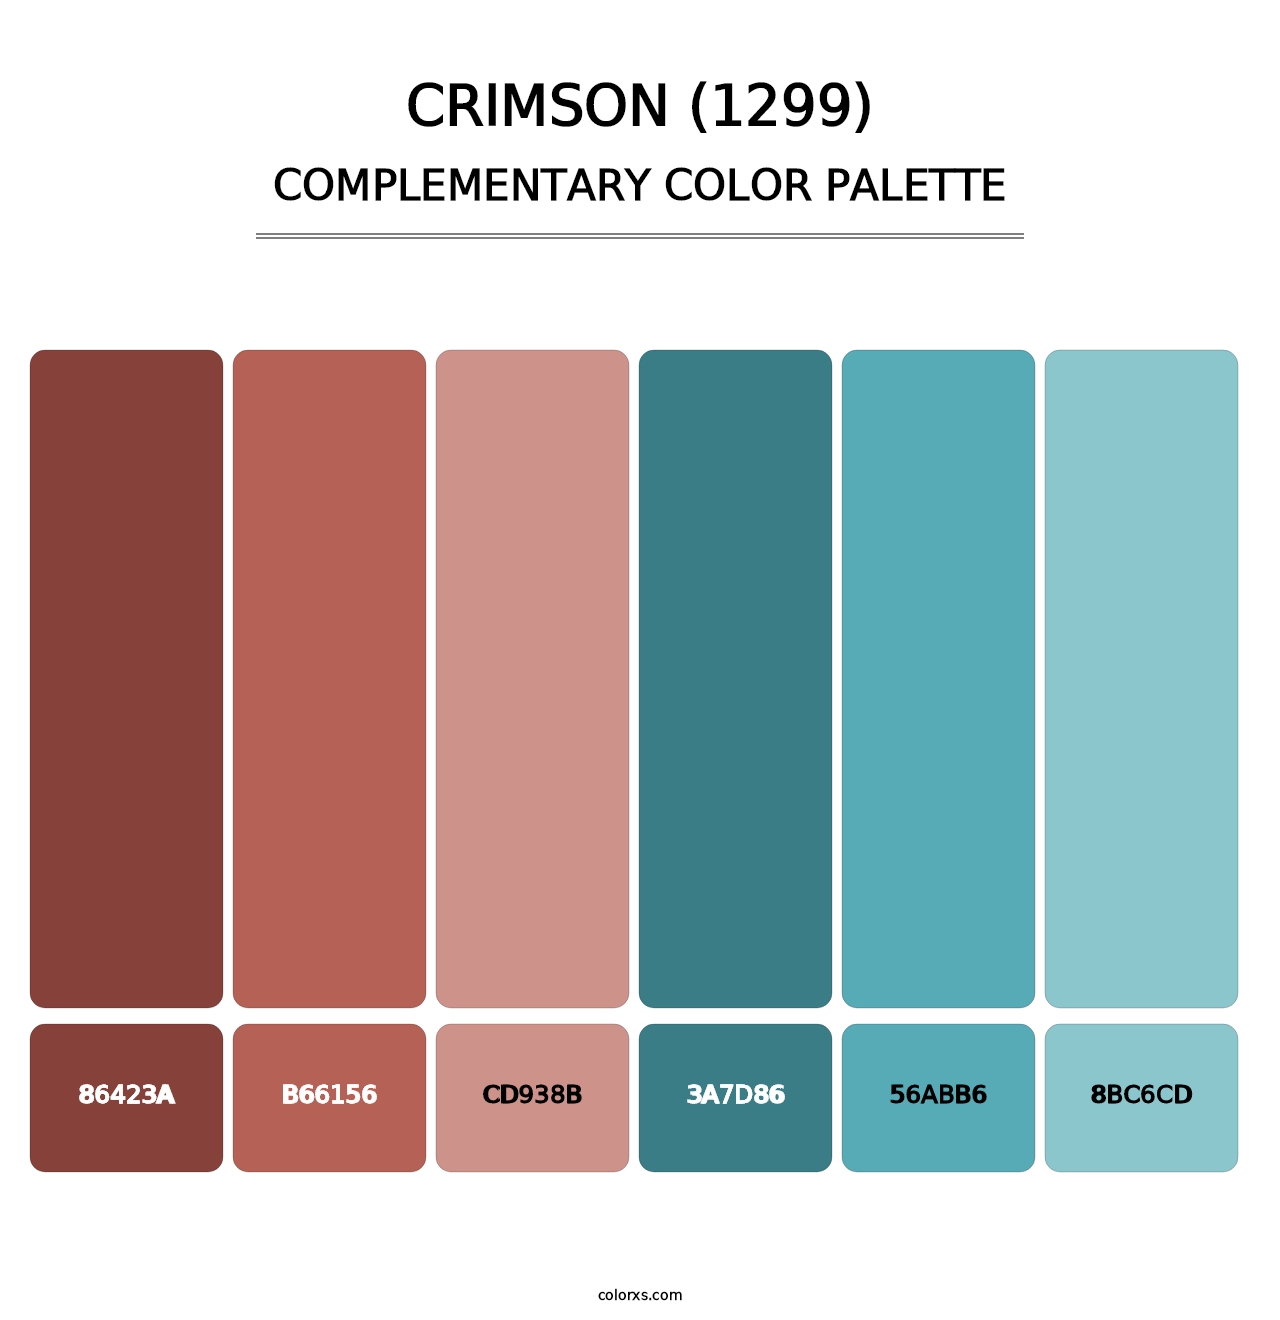 Crimson (1299) - Complementary Color Palette